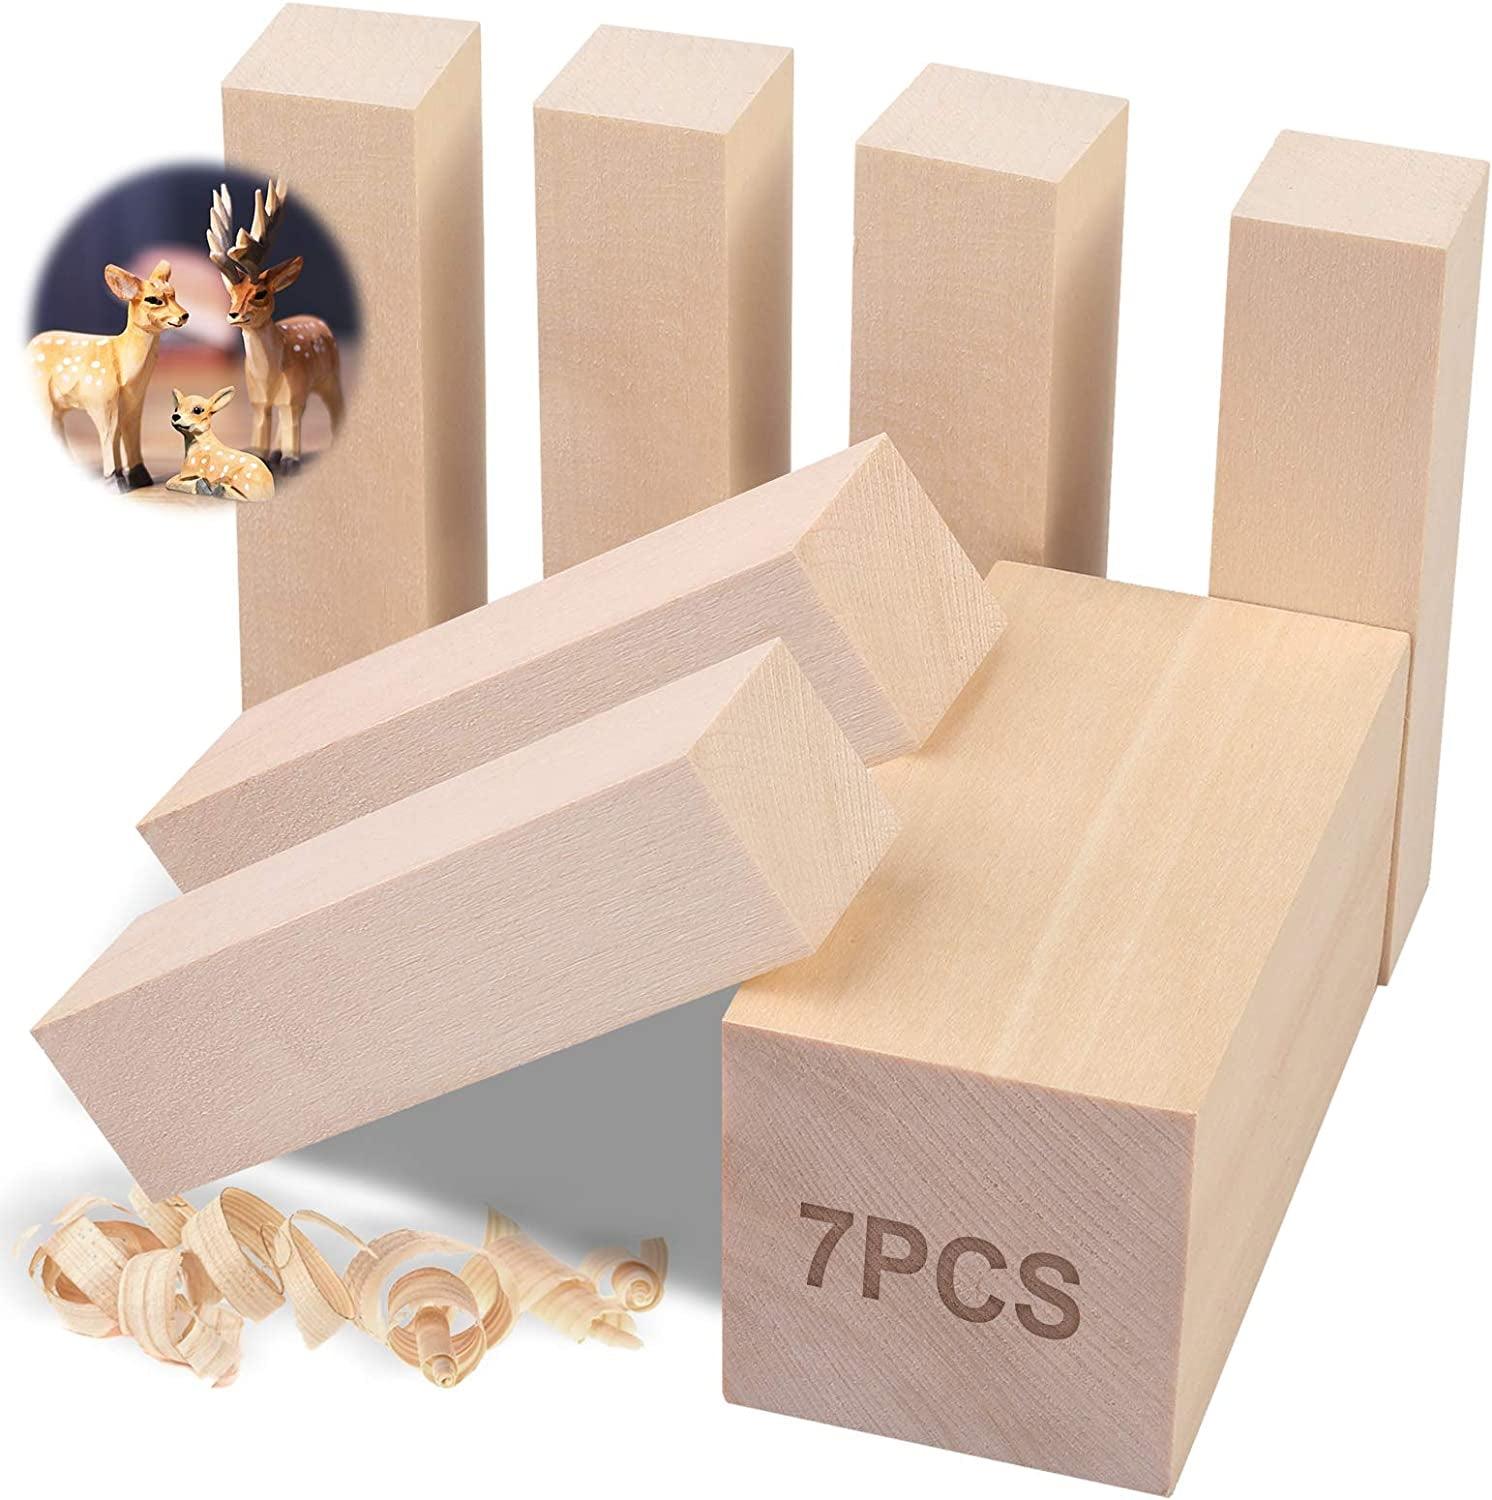 7Pcs Basswood Carving Blocks, Whittling Blocks for Craft, Carving Wood for Beginner to Expert - WoodArtSupply